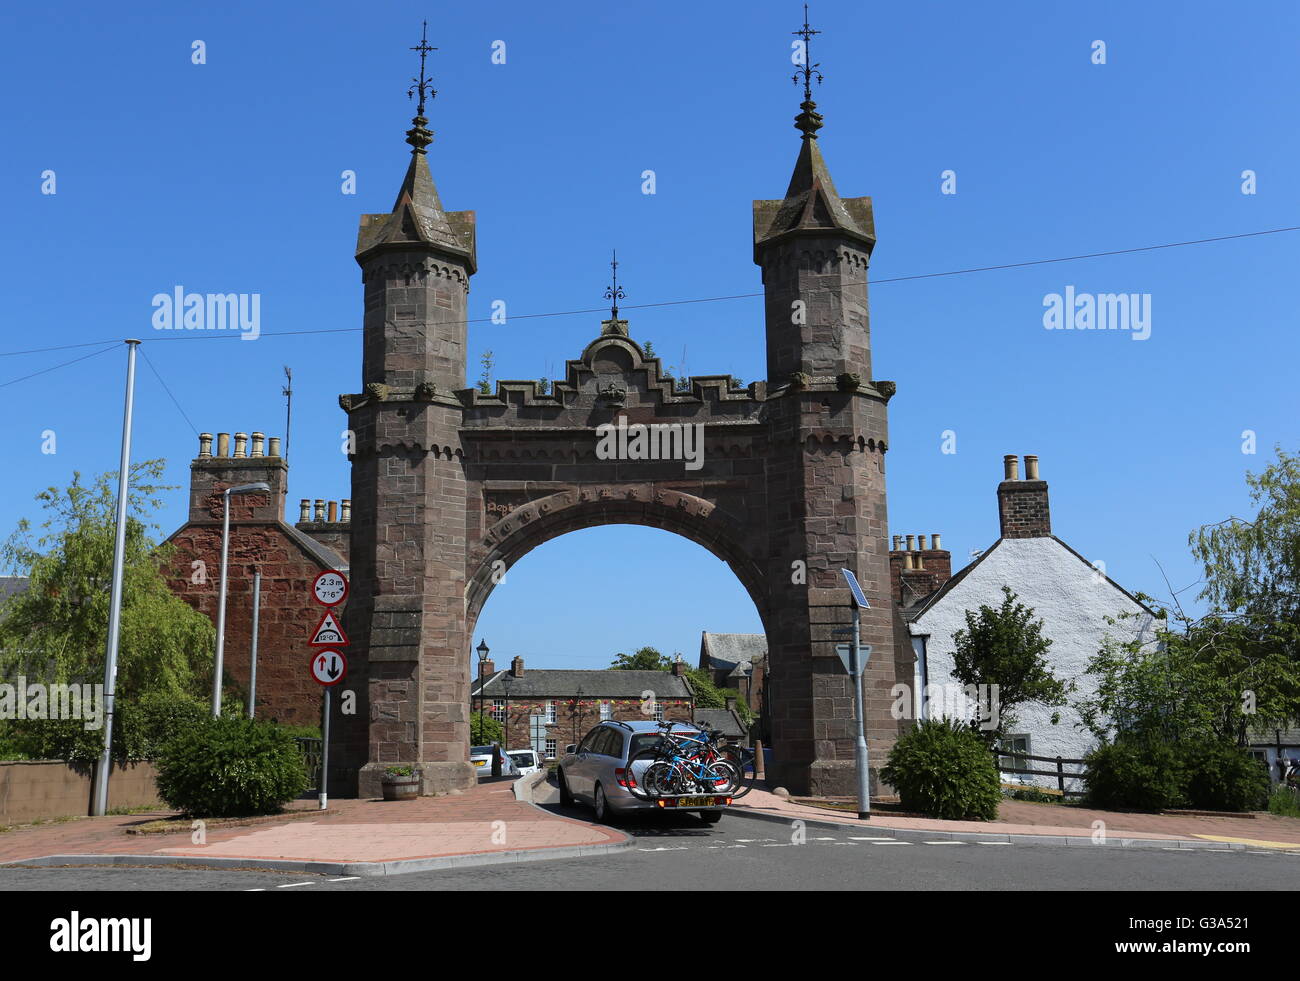 Royal arch fettercairn Schottland juni 2016 Stockfoto